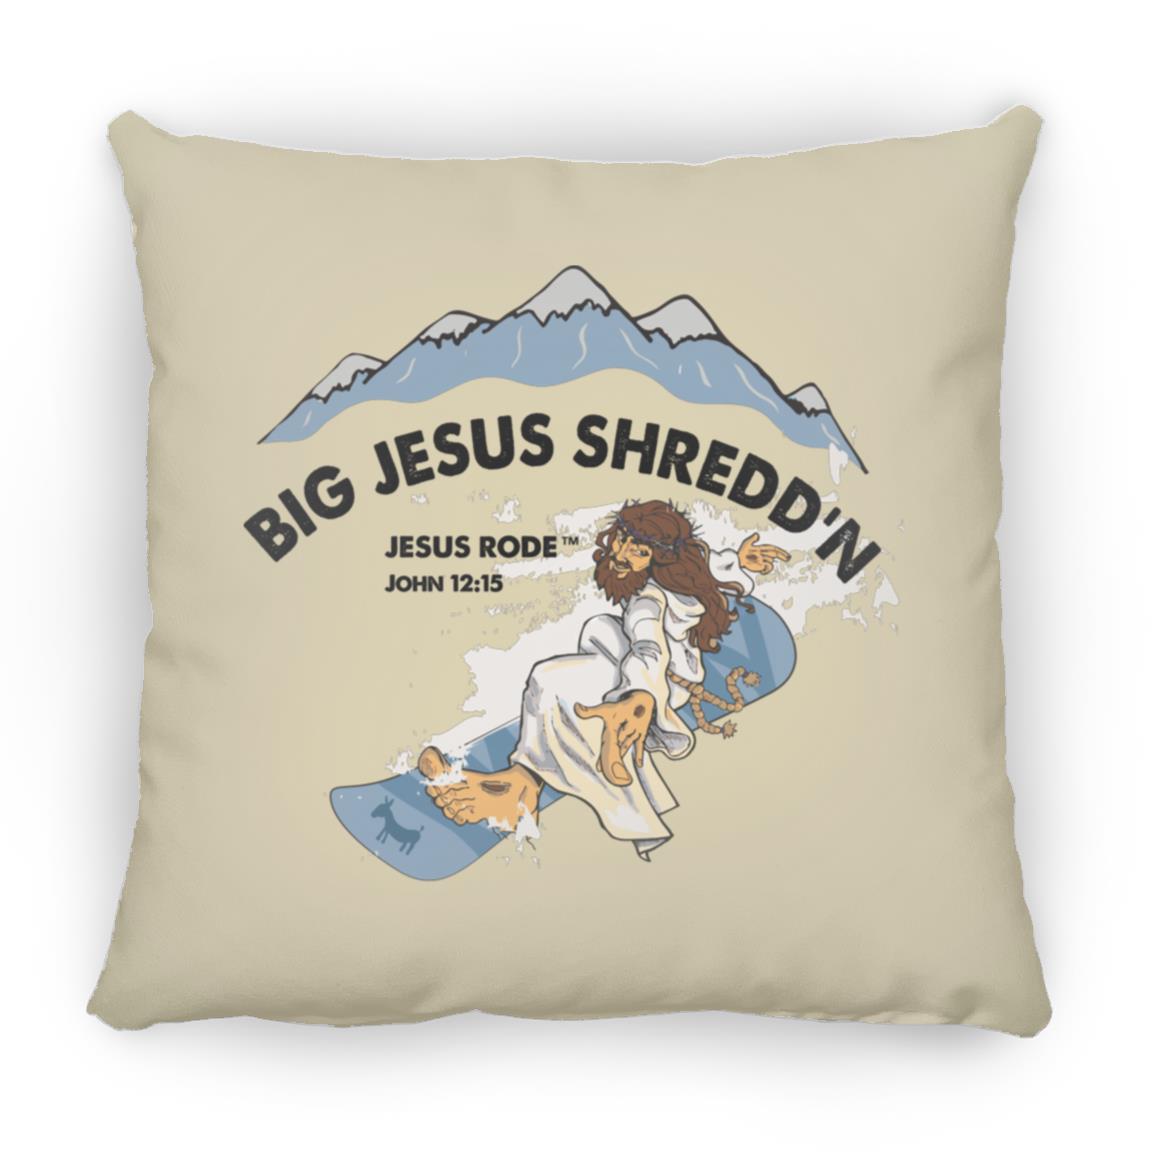 Shredd'n Jesus Large Square Pillow